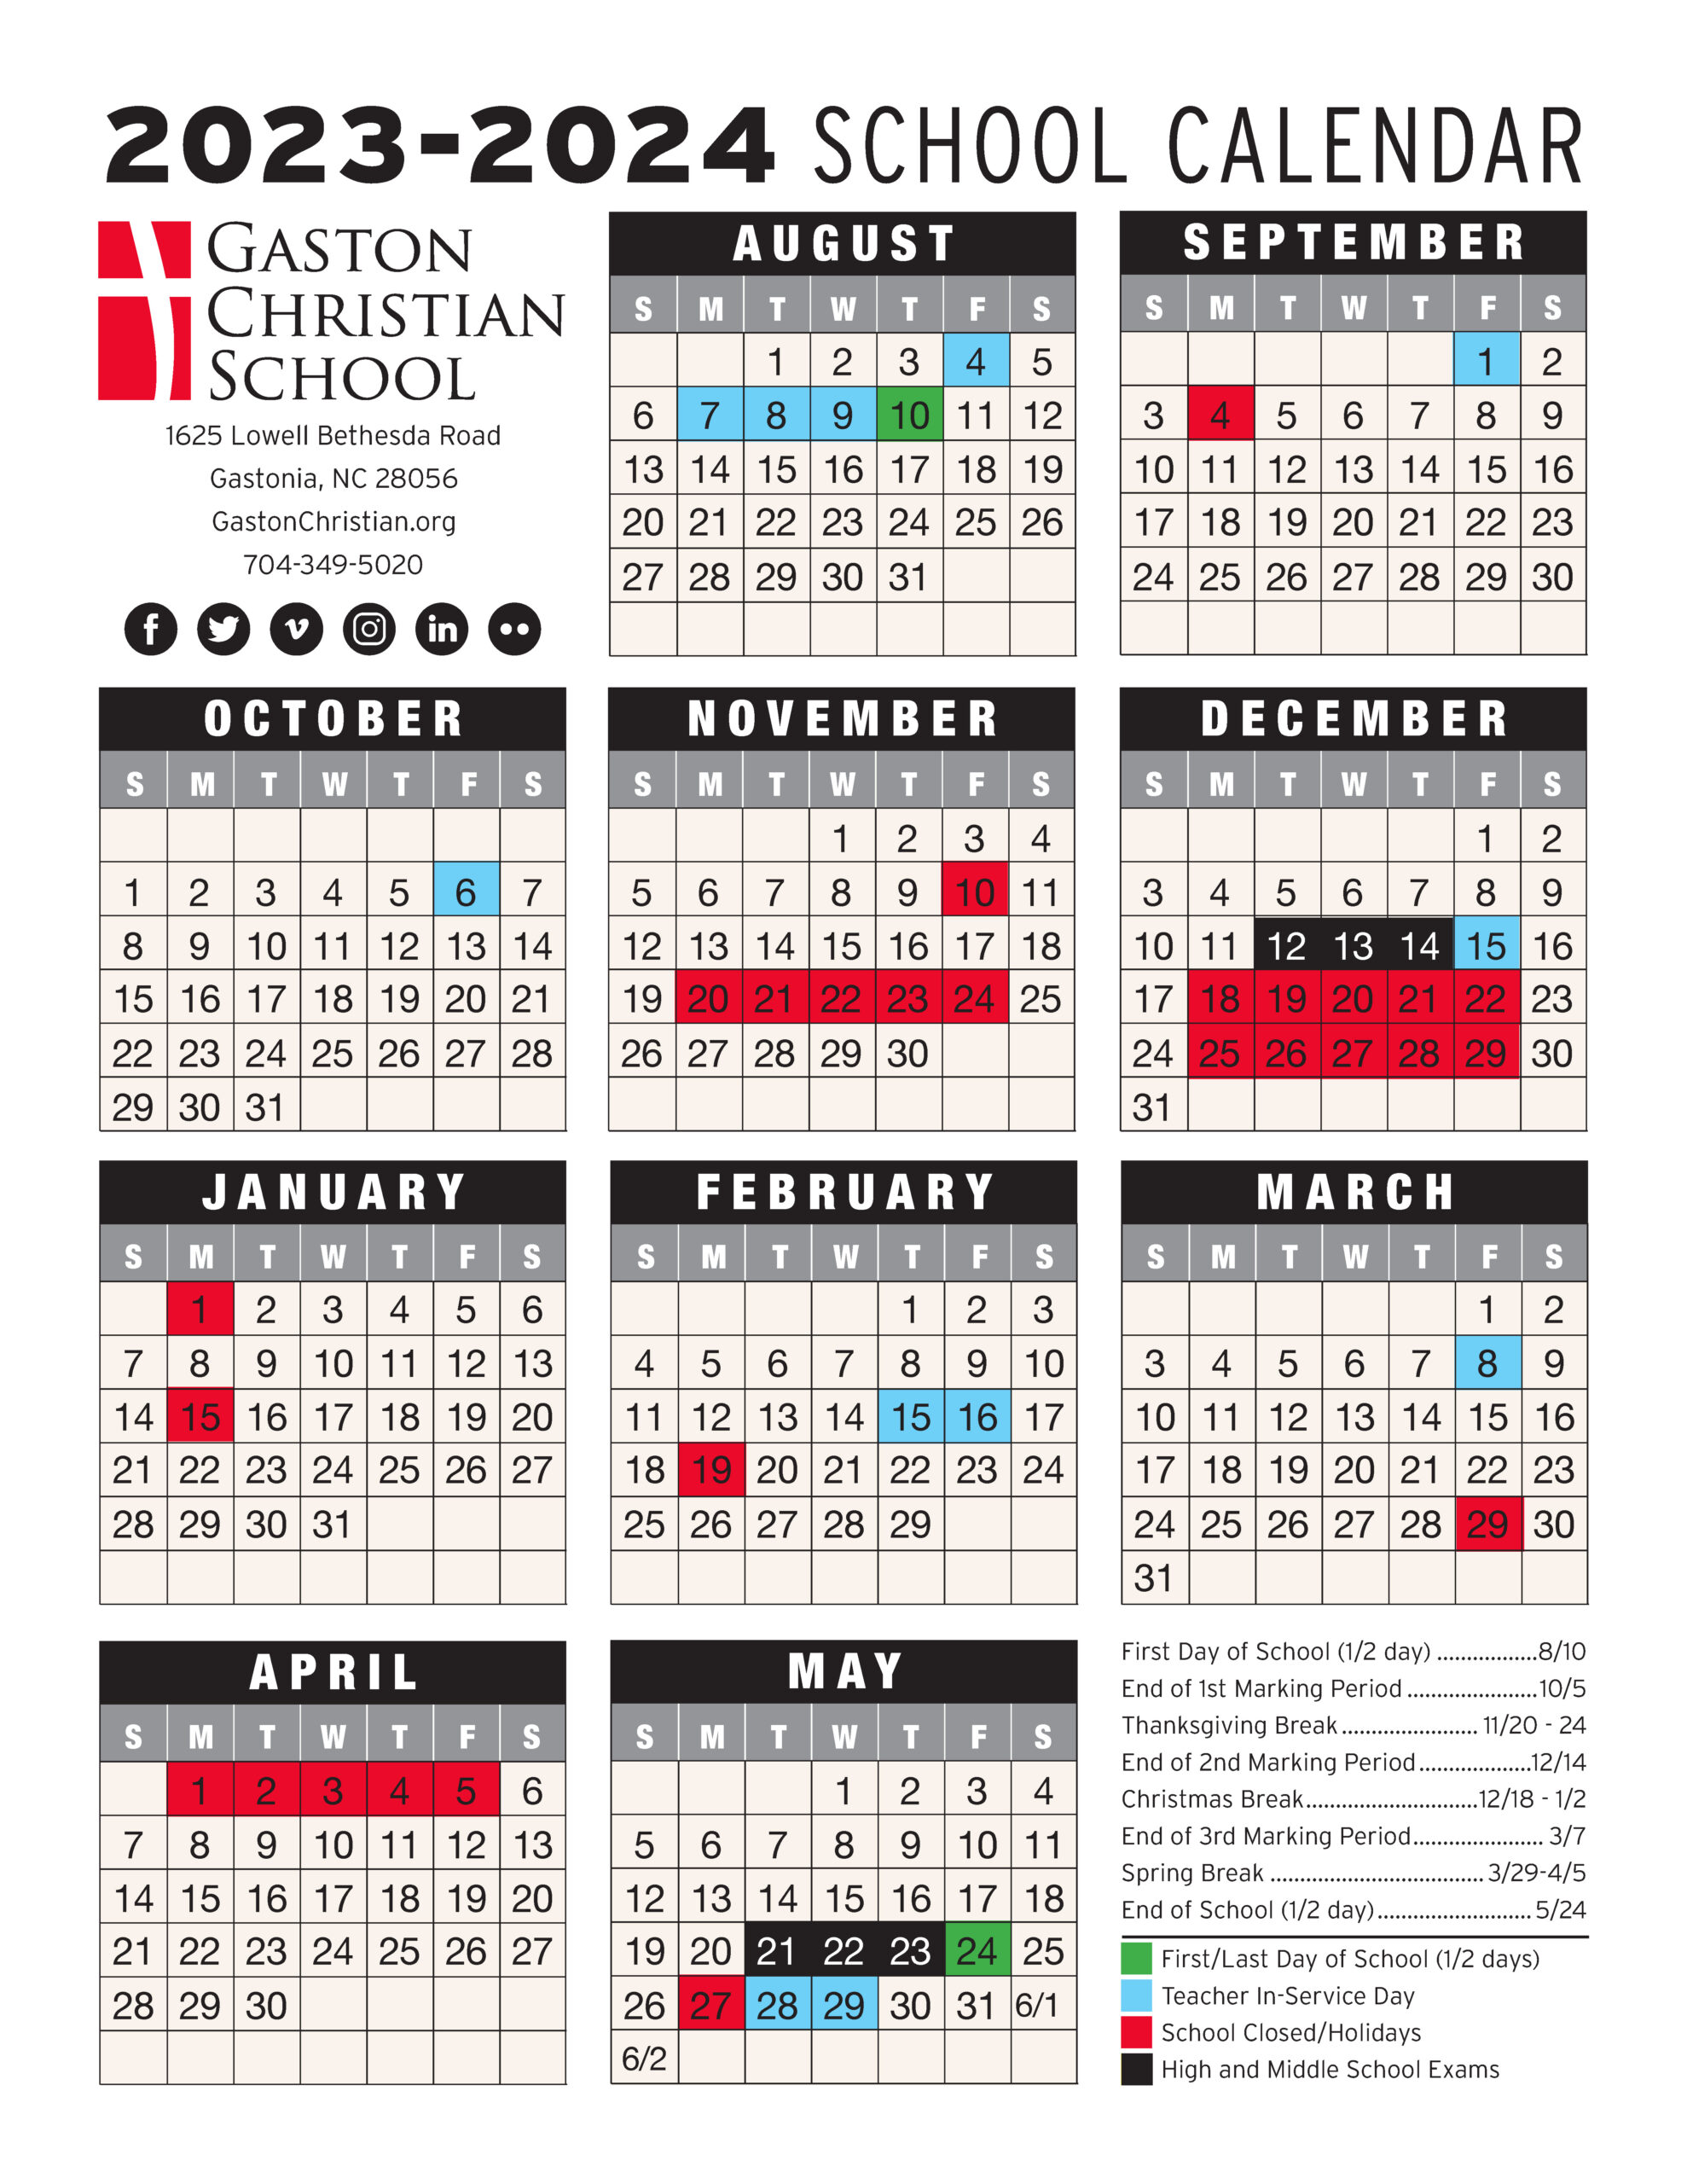 2023-2024 GCS Main School Calendar - Gaston Christian School